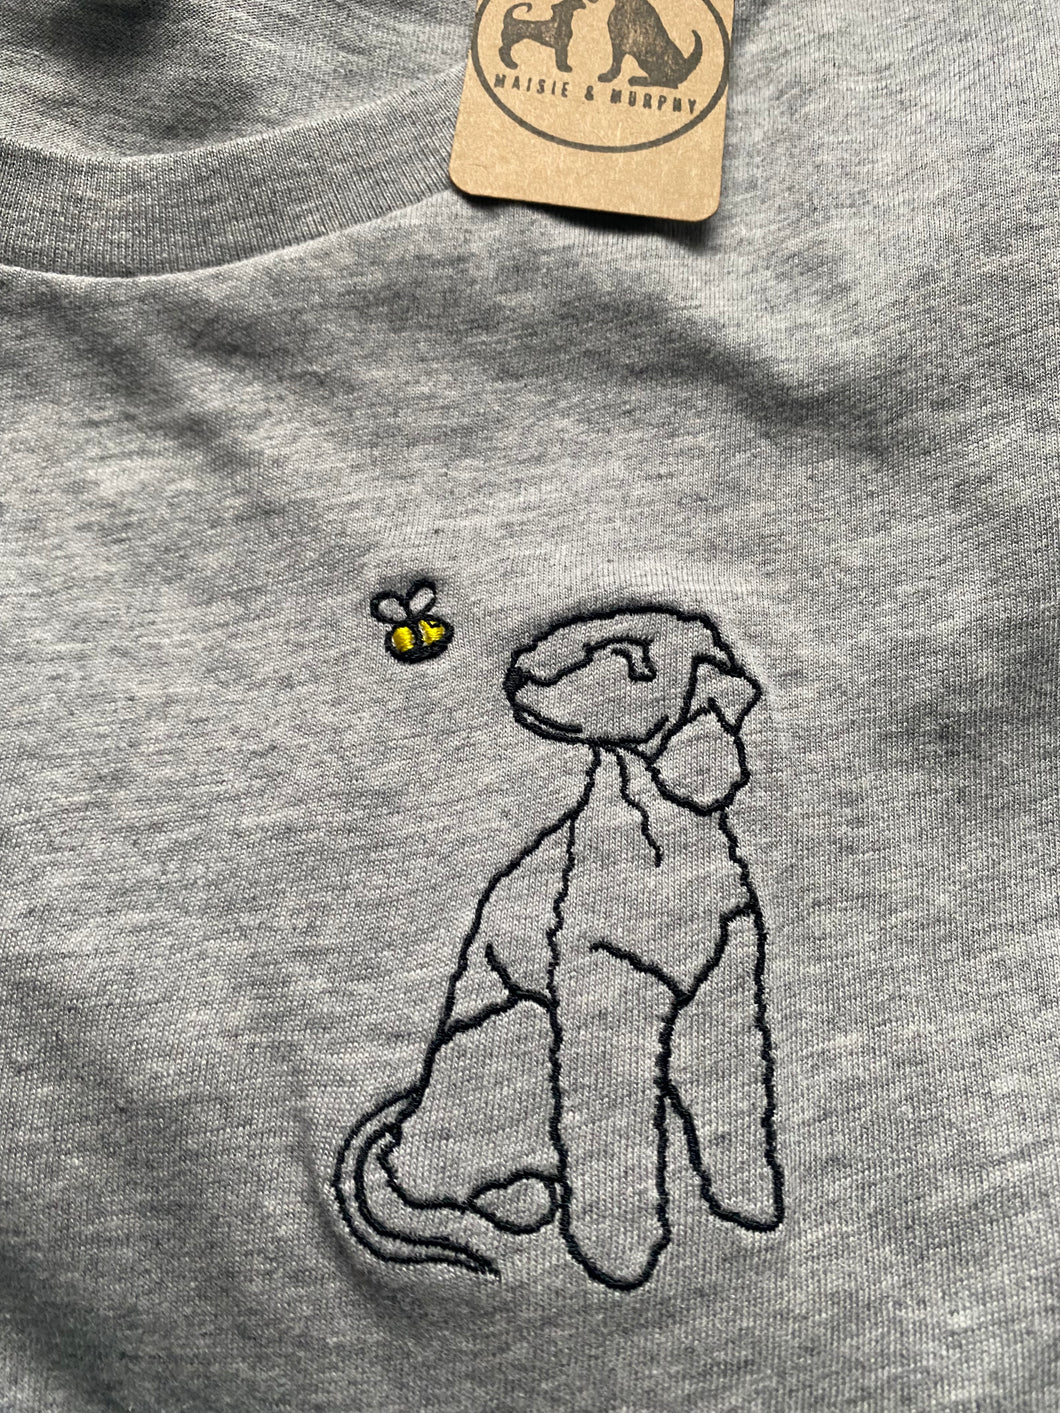 Bedlington Terrier Outline Sweatshirt - Gifts for Bedlington terrier  owners and lovers.